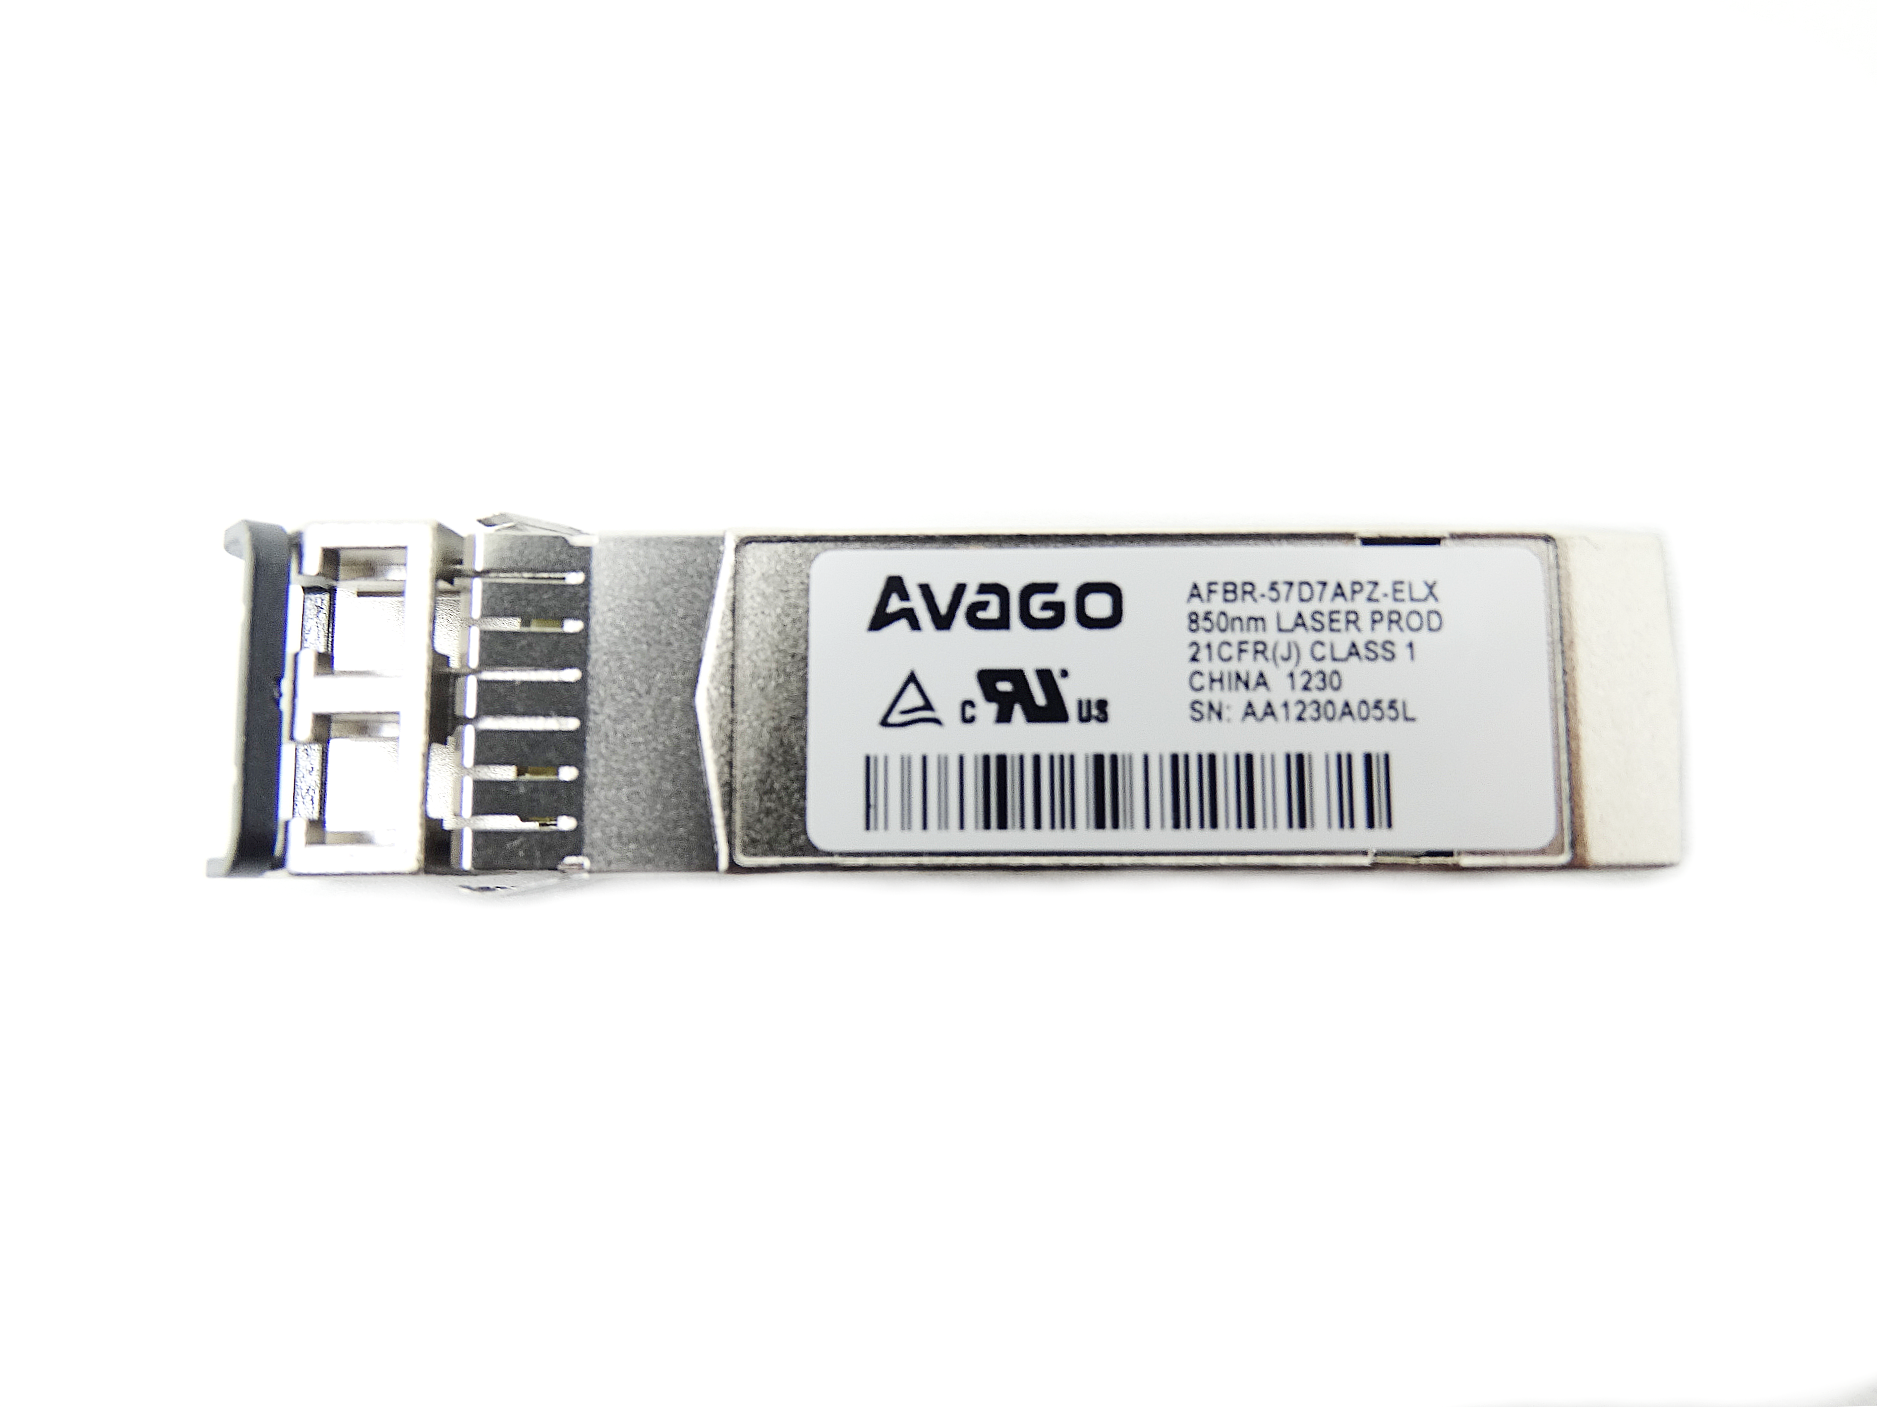 Avago AFBR-57D7-APZ-ELX 8GB SFP+ Transceiver Module (AFBR-57D7APZ-ELX)